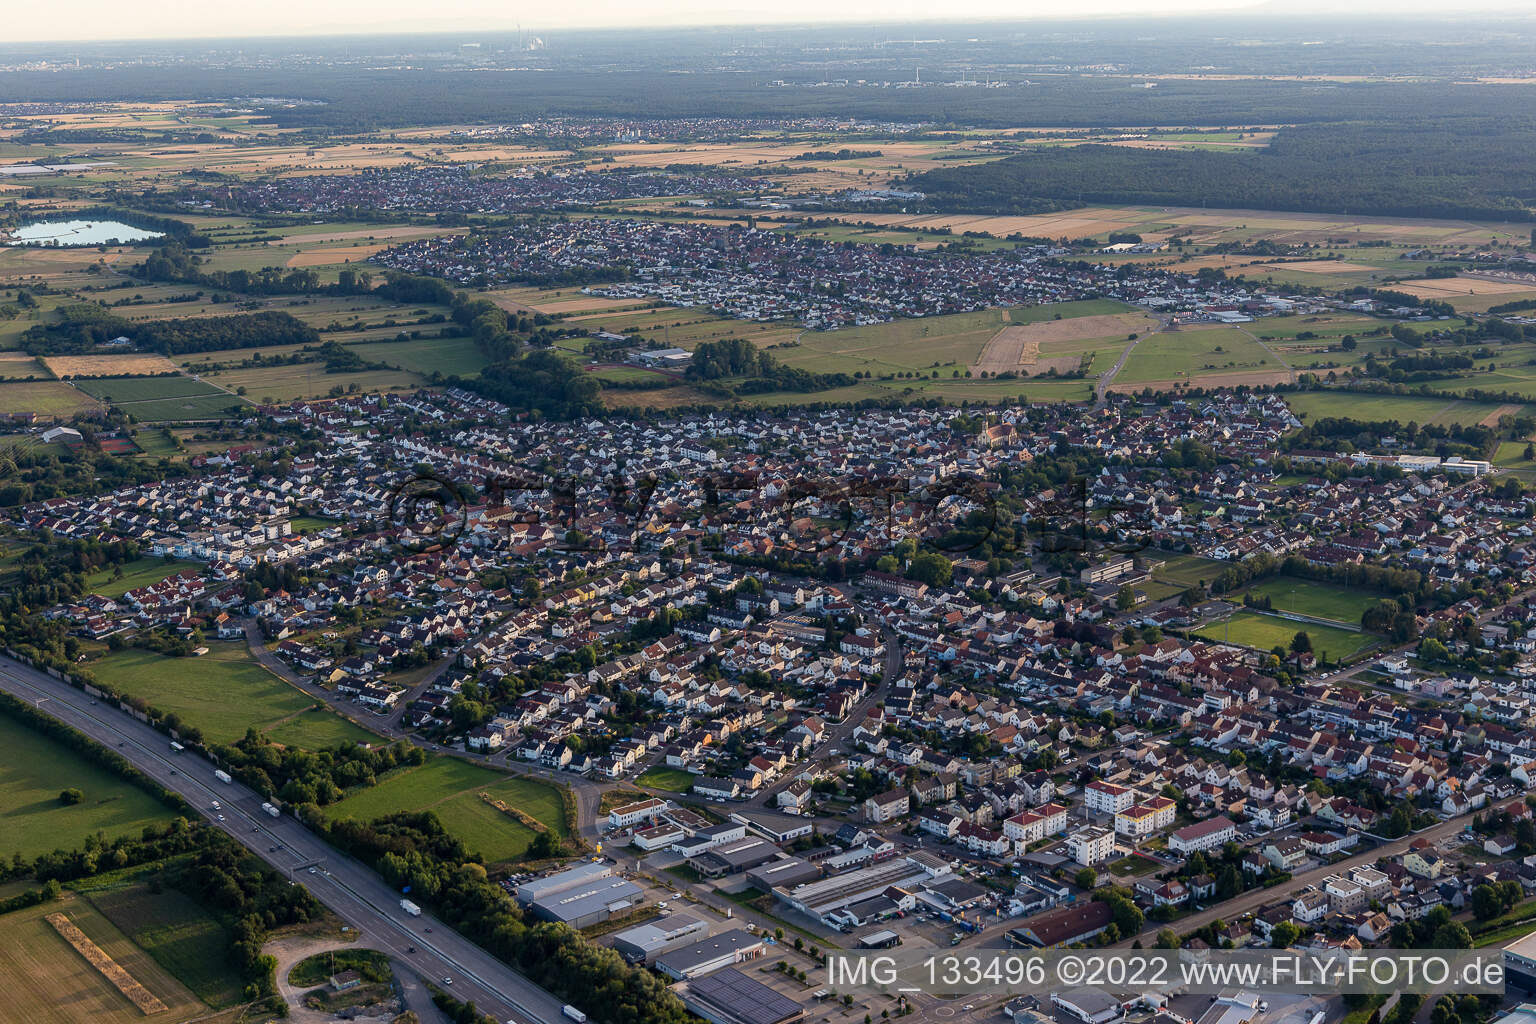 District Karlsdorf in Karlsdorf-Neuthard in the state Baden-Wuerttemberg, Germany from above